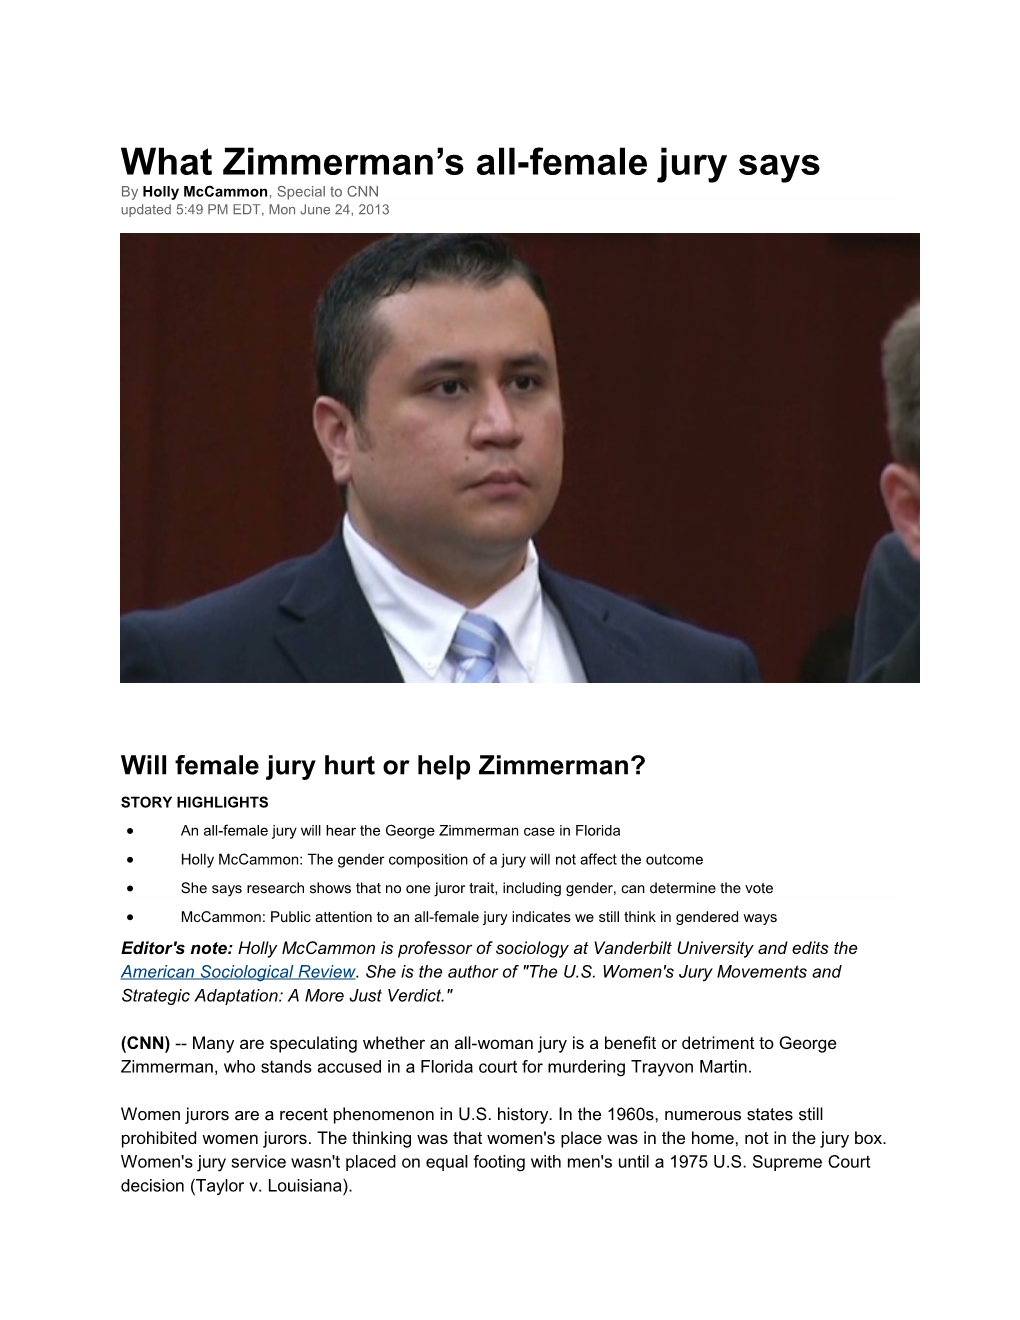 What Zimmerman S All-Female Jury Says